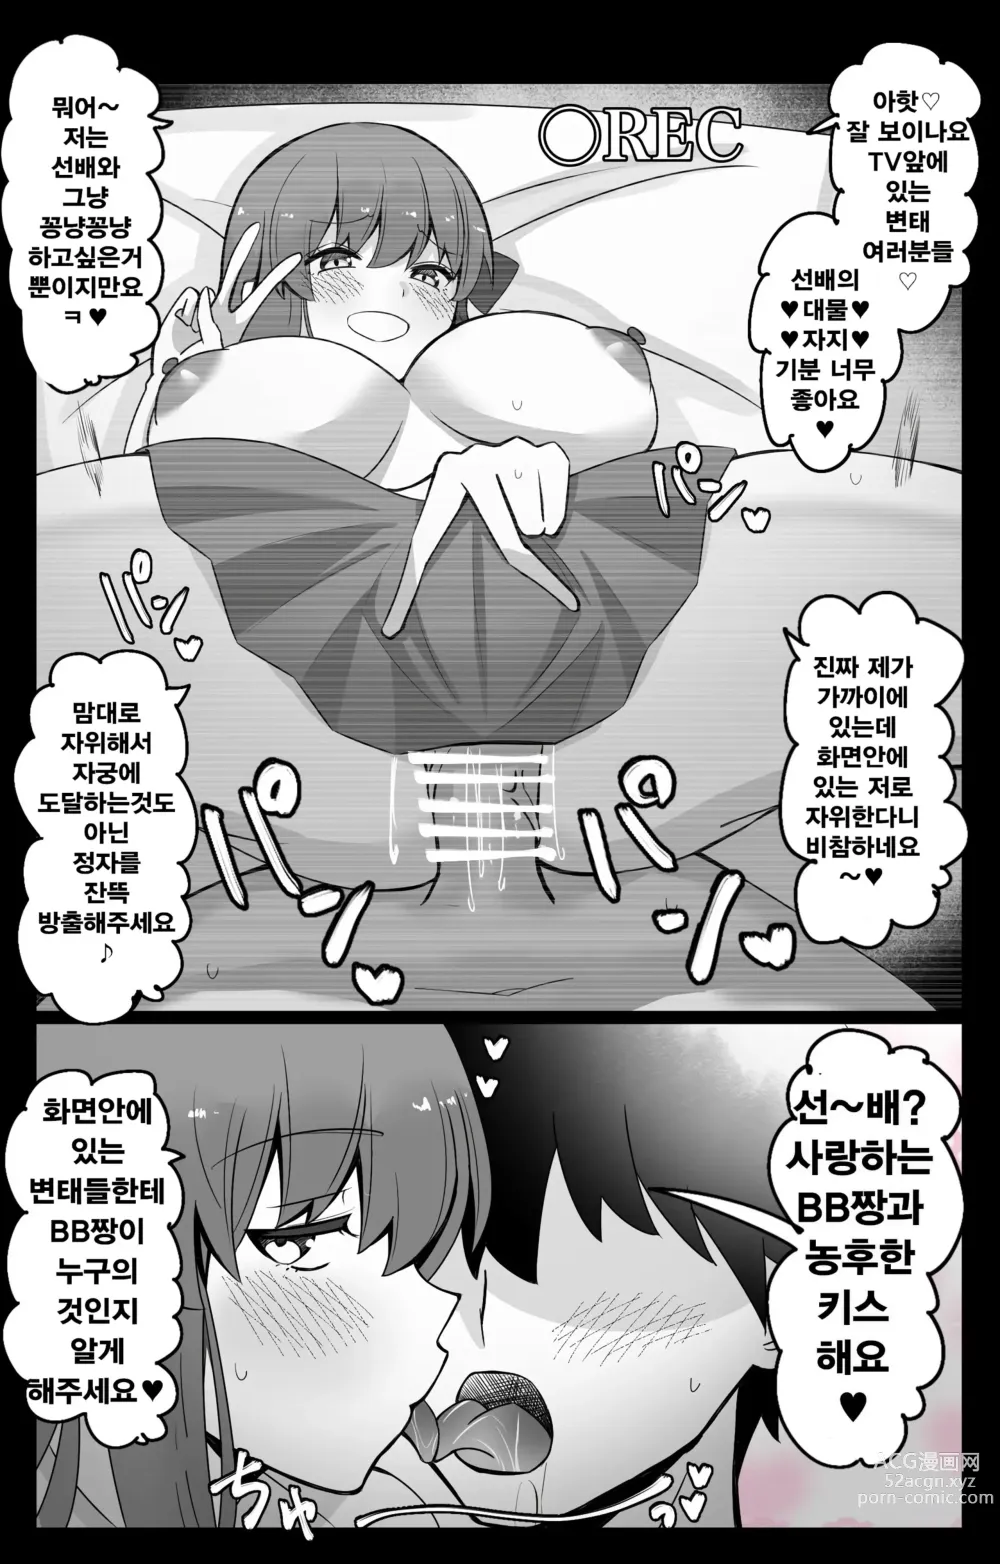 Page 3 of doujinshi 『칼데아 학원 BB채널부』 01~BB편